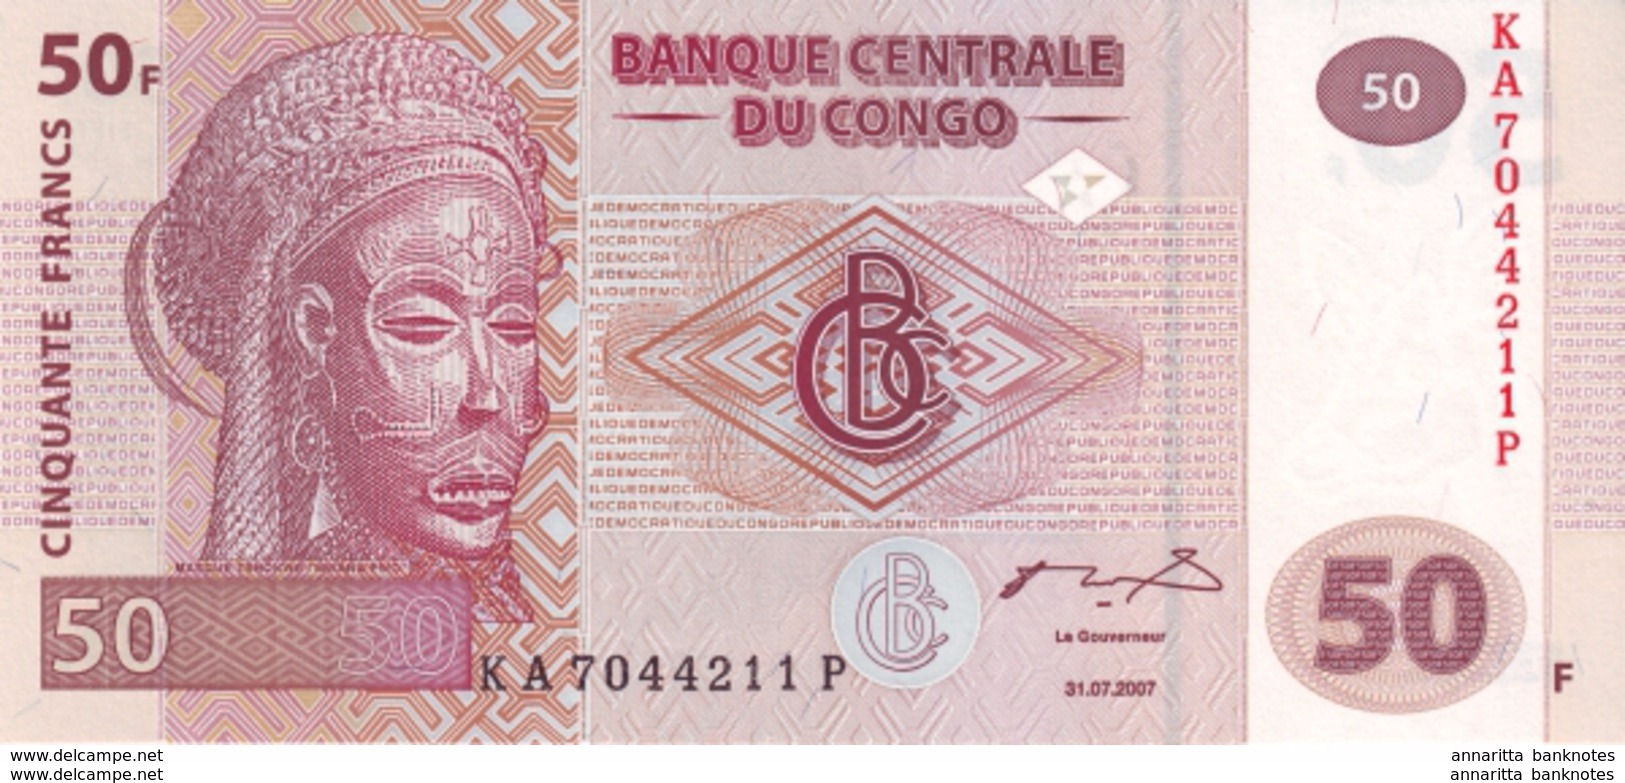 CONGO DEMOCRATIC REPUBLIC 50 FRANCS 2007 P-97 UNC PRINTER GIESECKE & DEVRIENT [ CD319a ] - Democratic Republic Of The Congo & Zaire